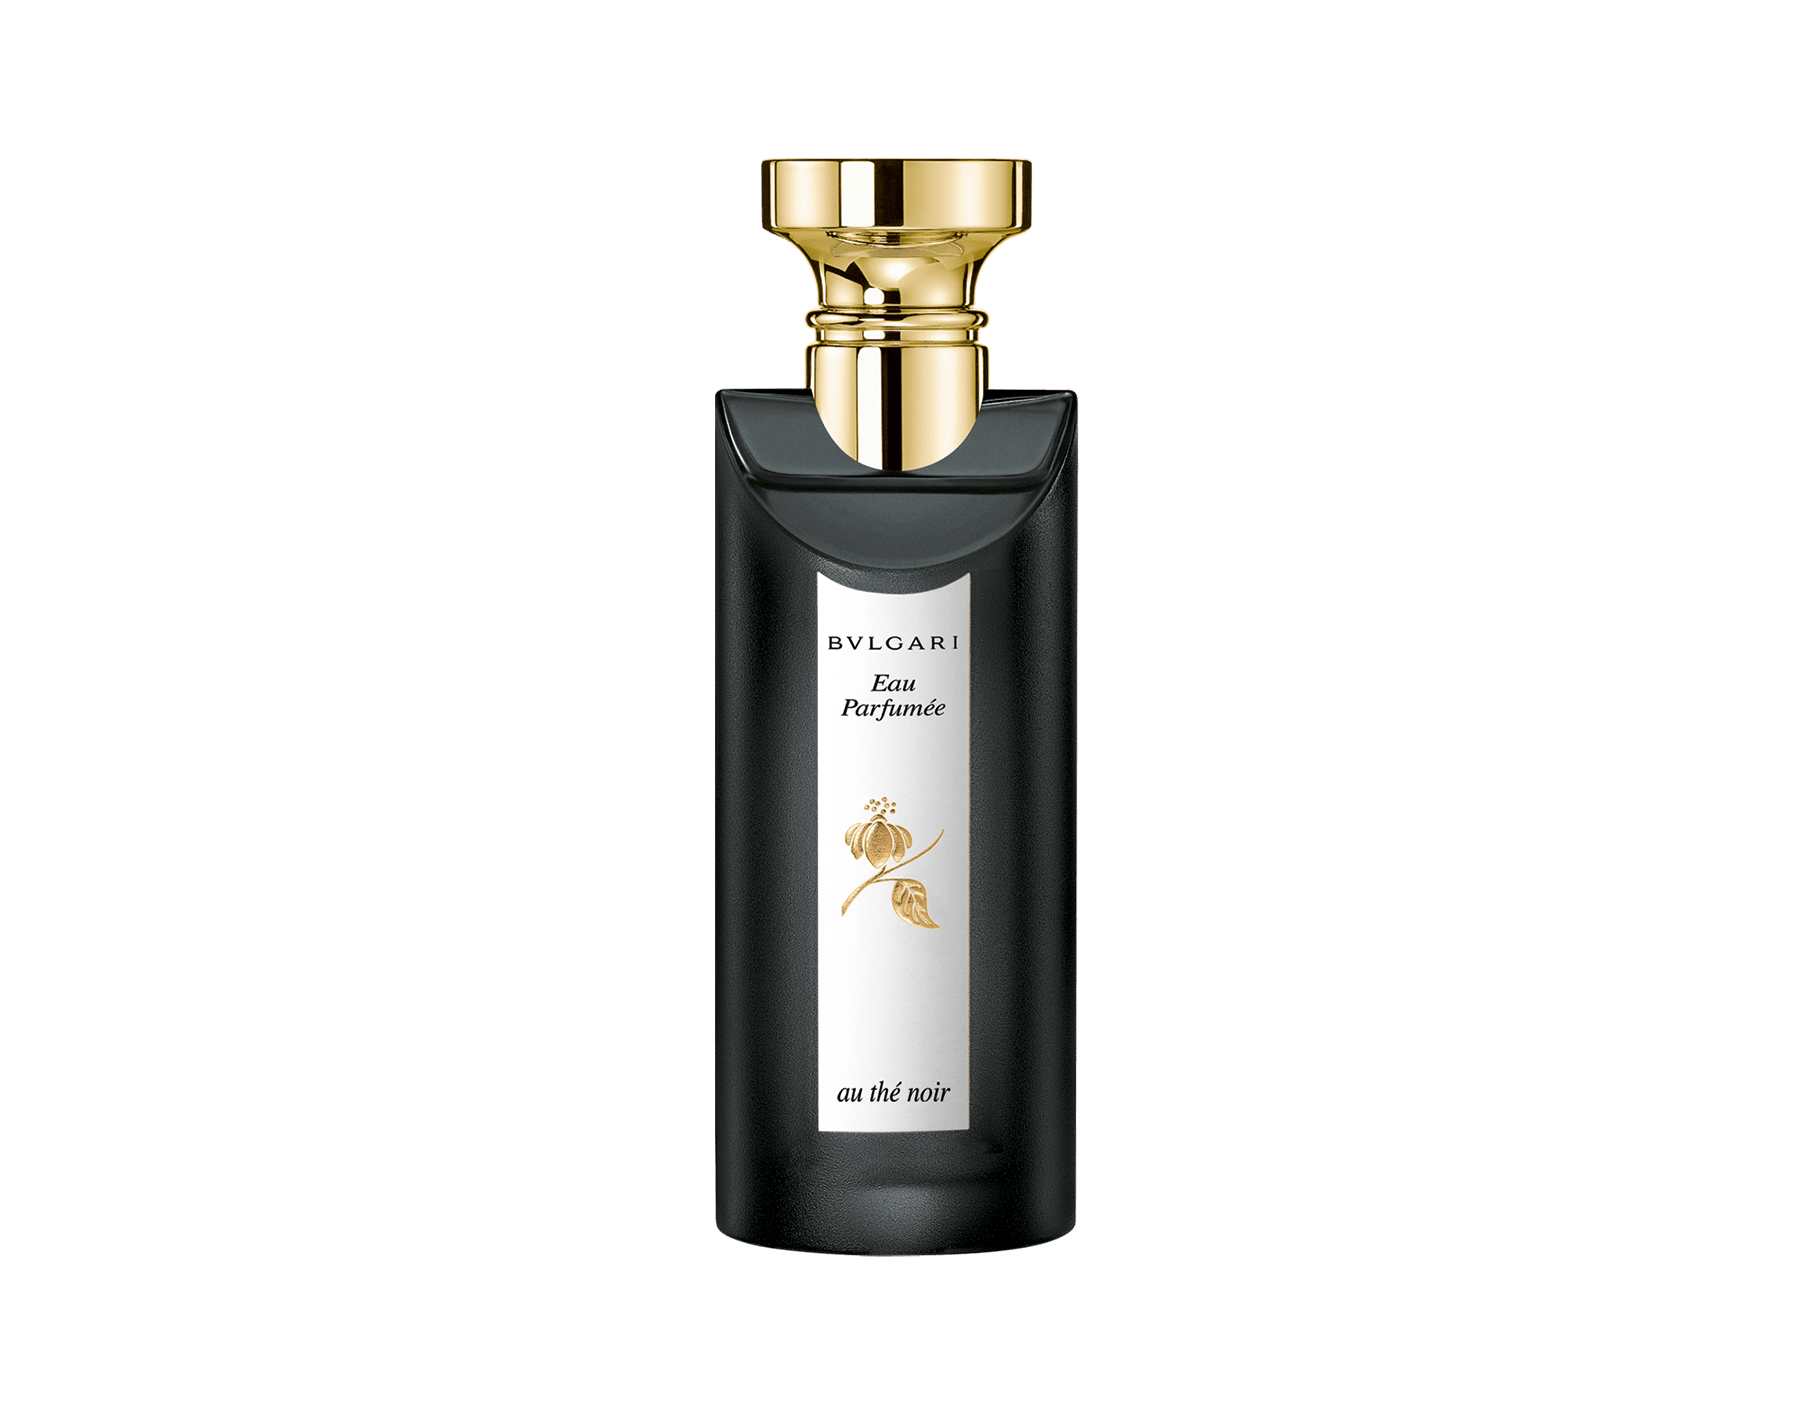 bvlgari perfumes online